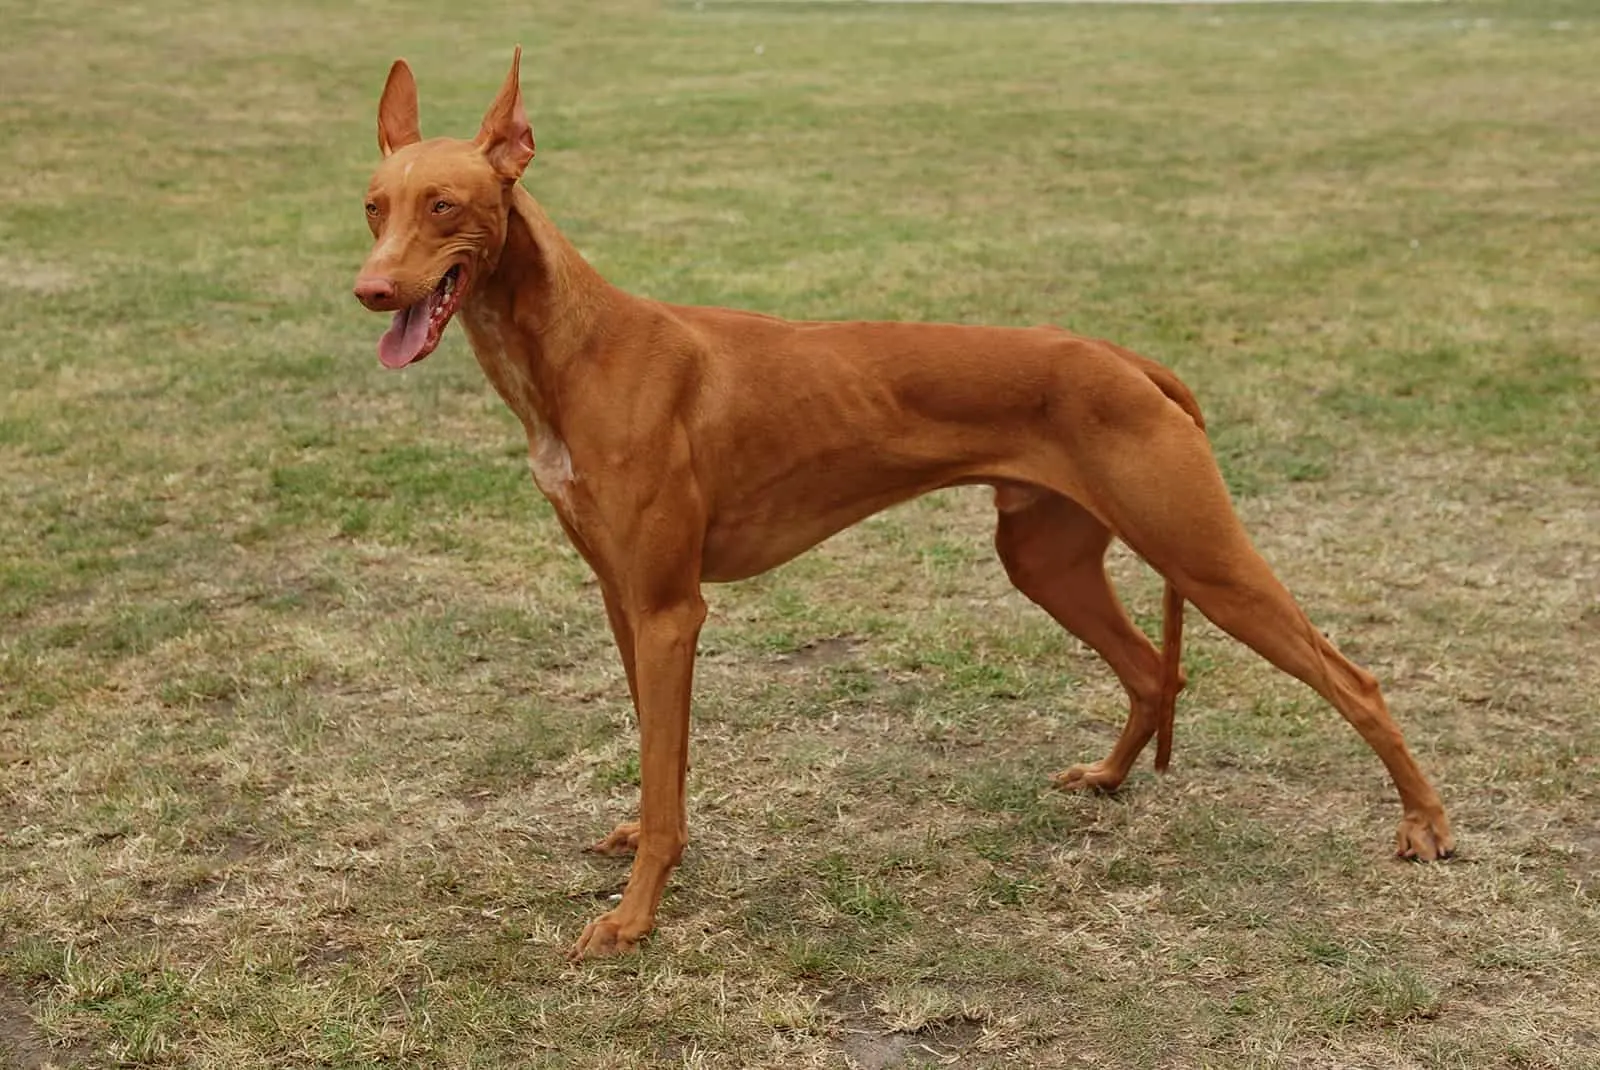 pharaoh hound dog standing on the grass